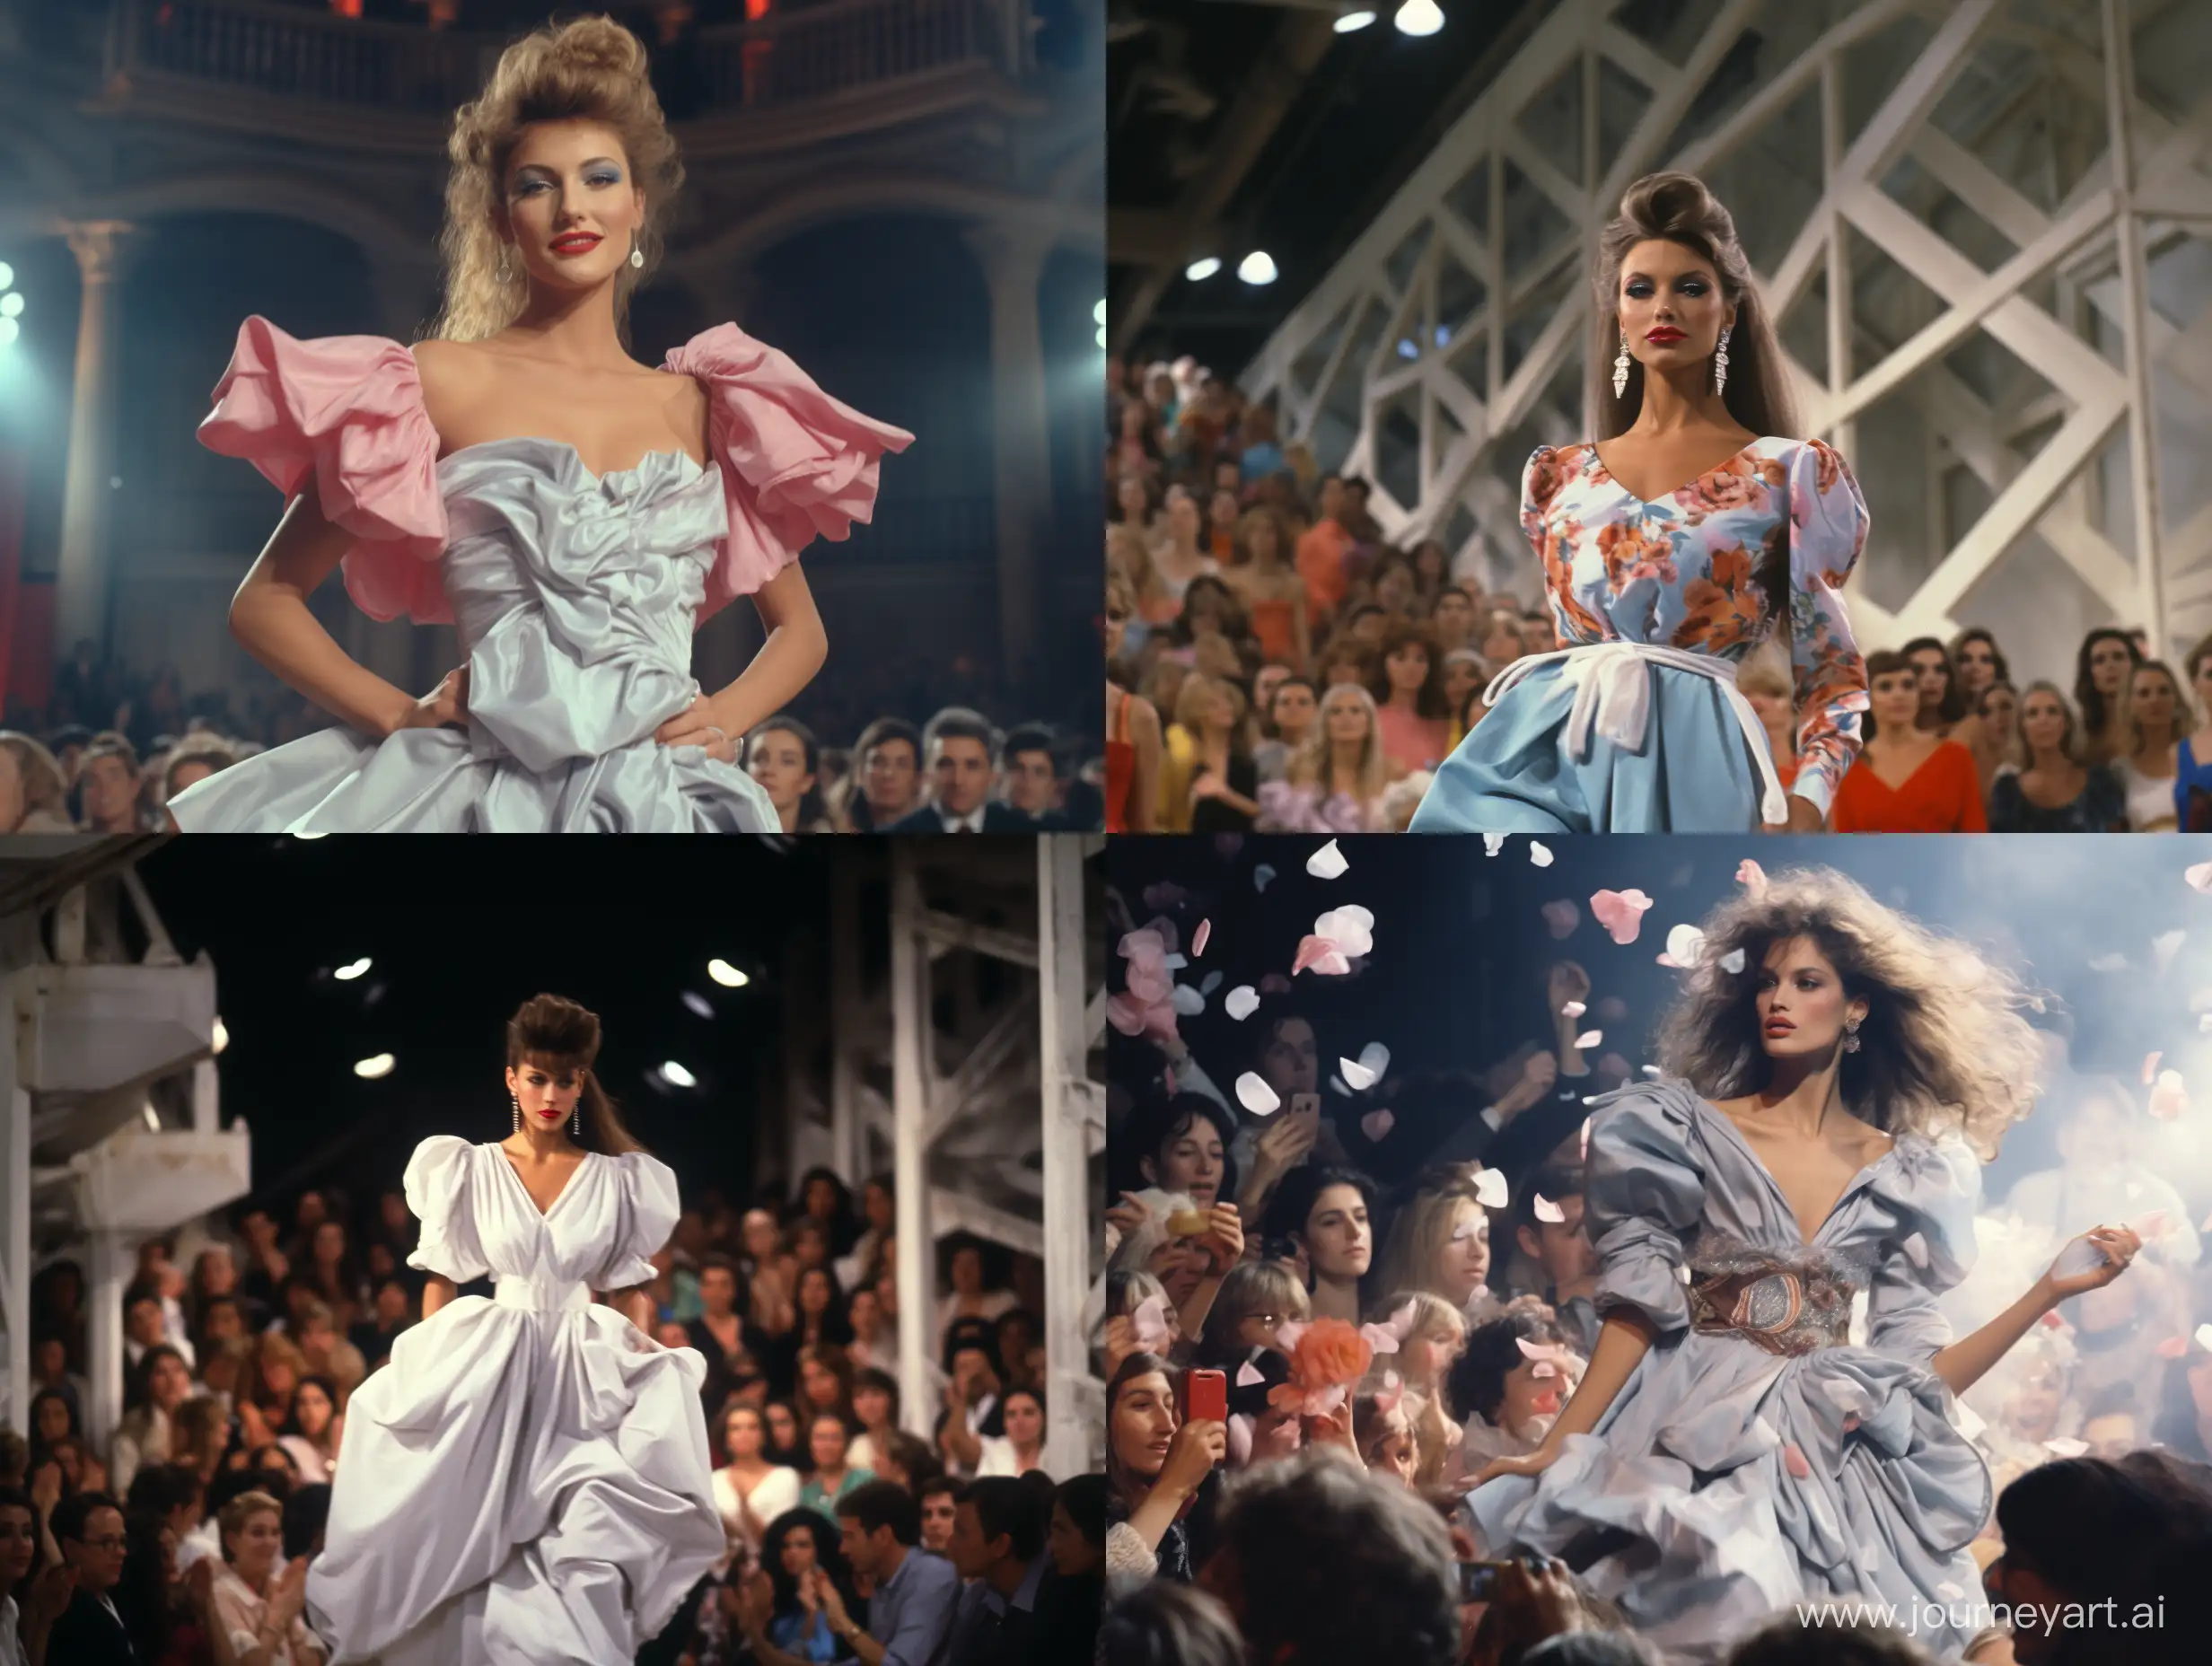 Nostalgic-1980s-Fashion-Show-Captured-on-VHS-Tape